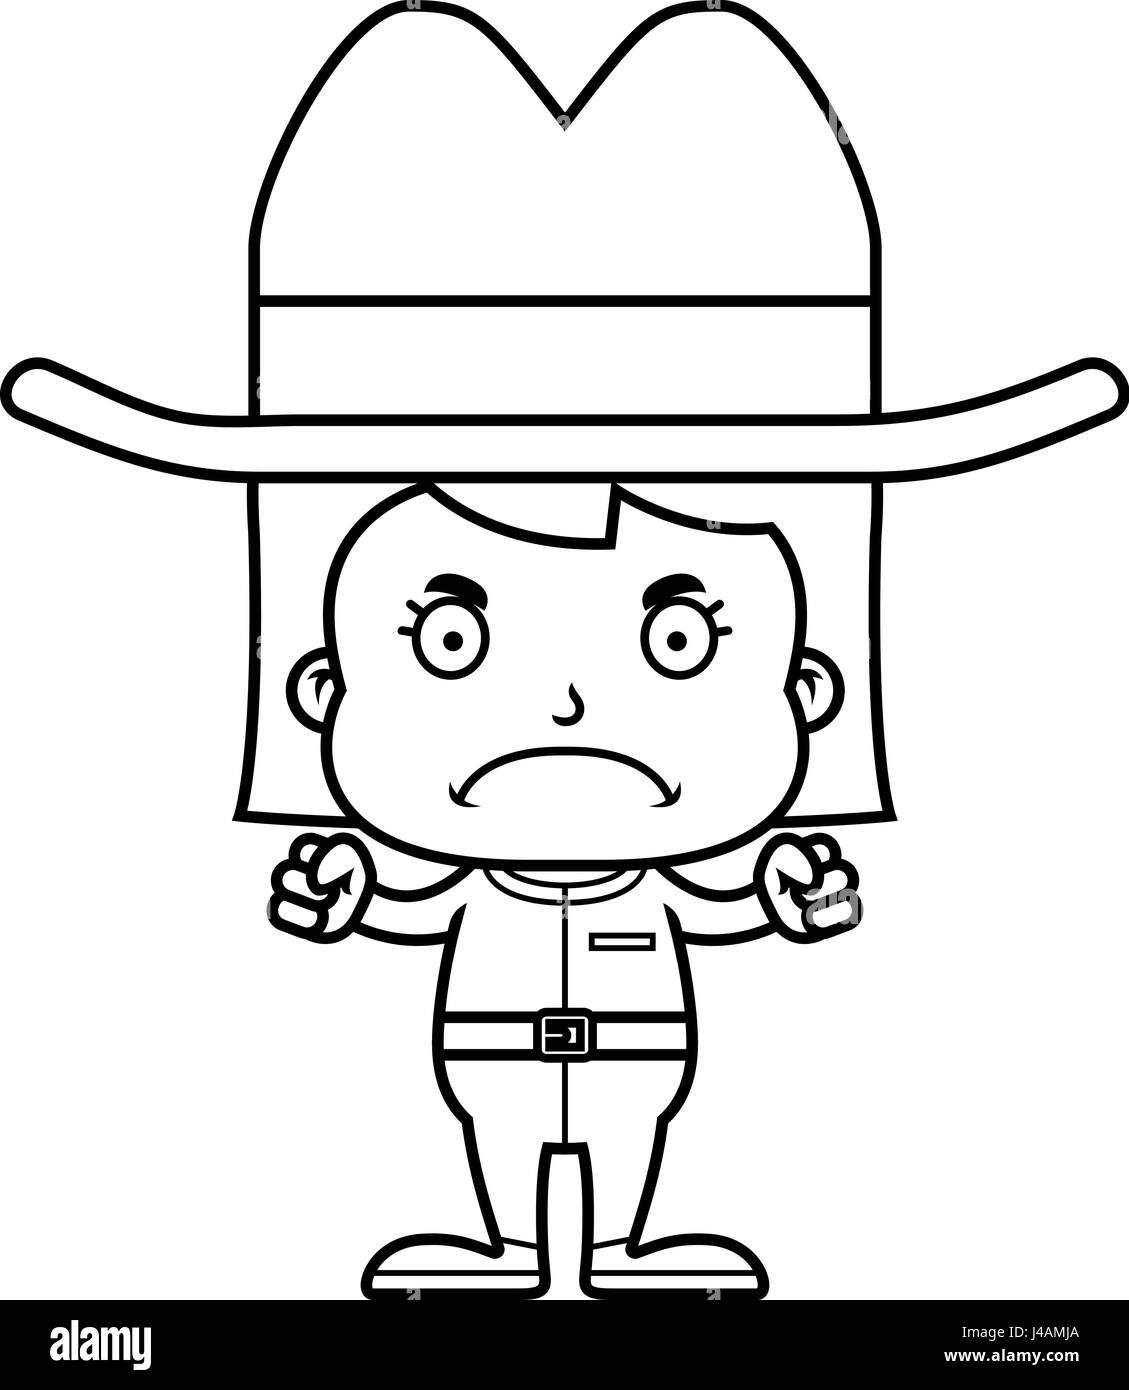 https://c8.alamy.com/comp/J4AMJA/a-cartoon-cowboy-girl-looking-angry-J4AMJA.jpg